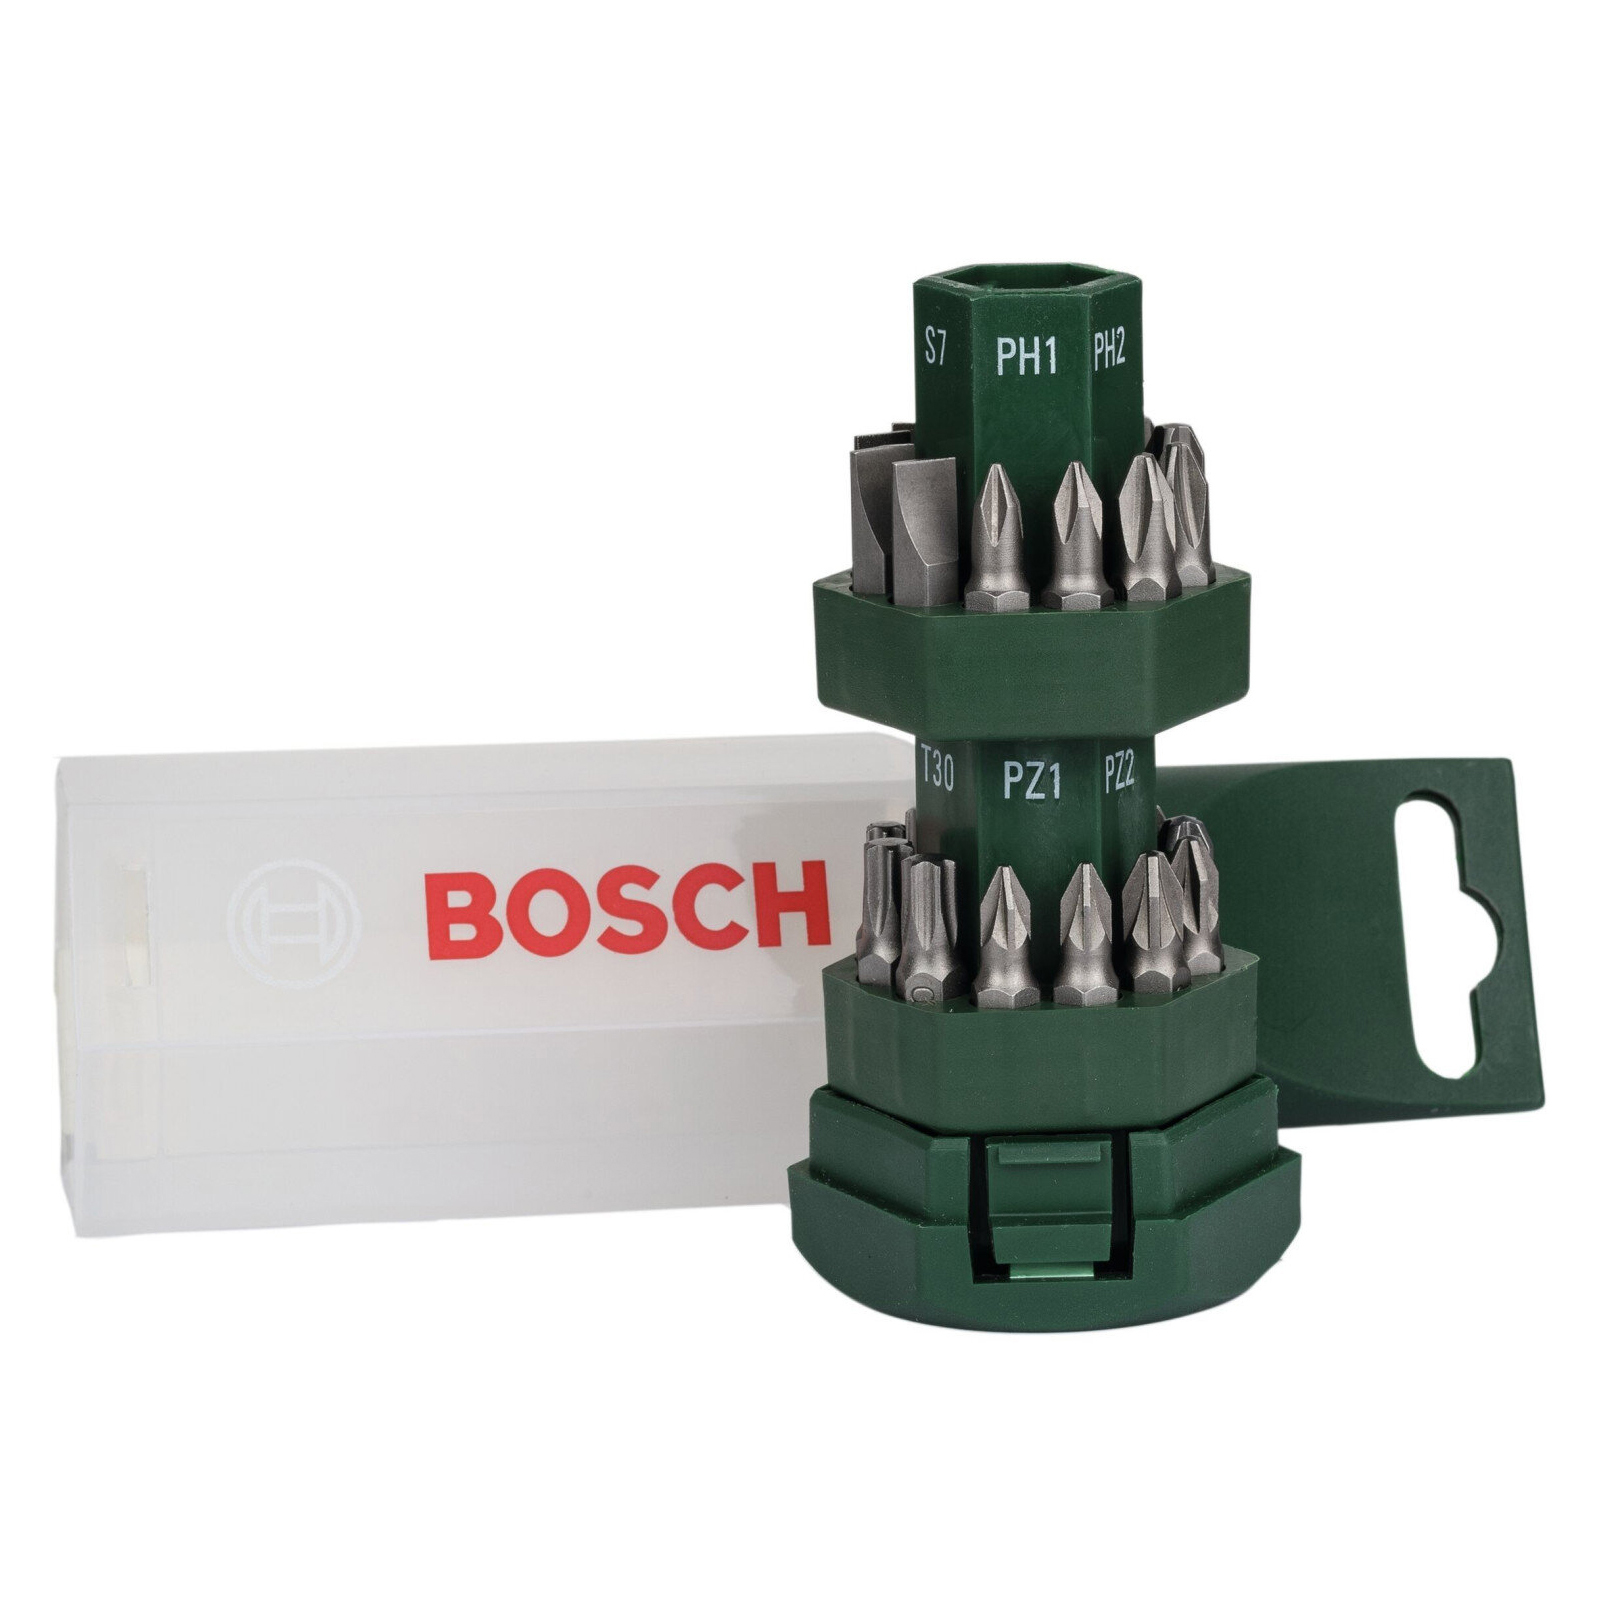 Набор бит BOSCH 2607019503 (25 шт.) набор бит bosch promoline 25пр 2607019503